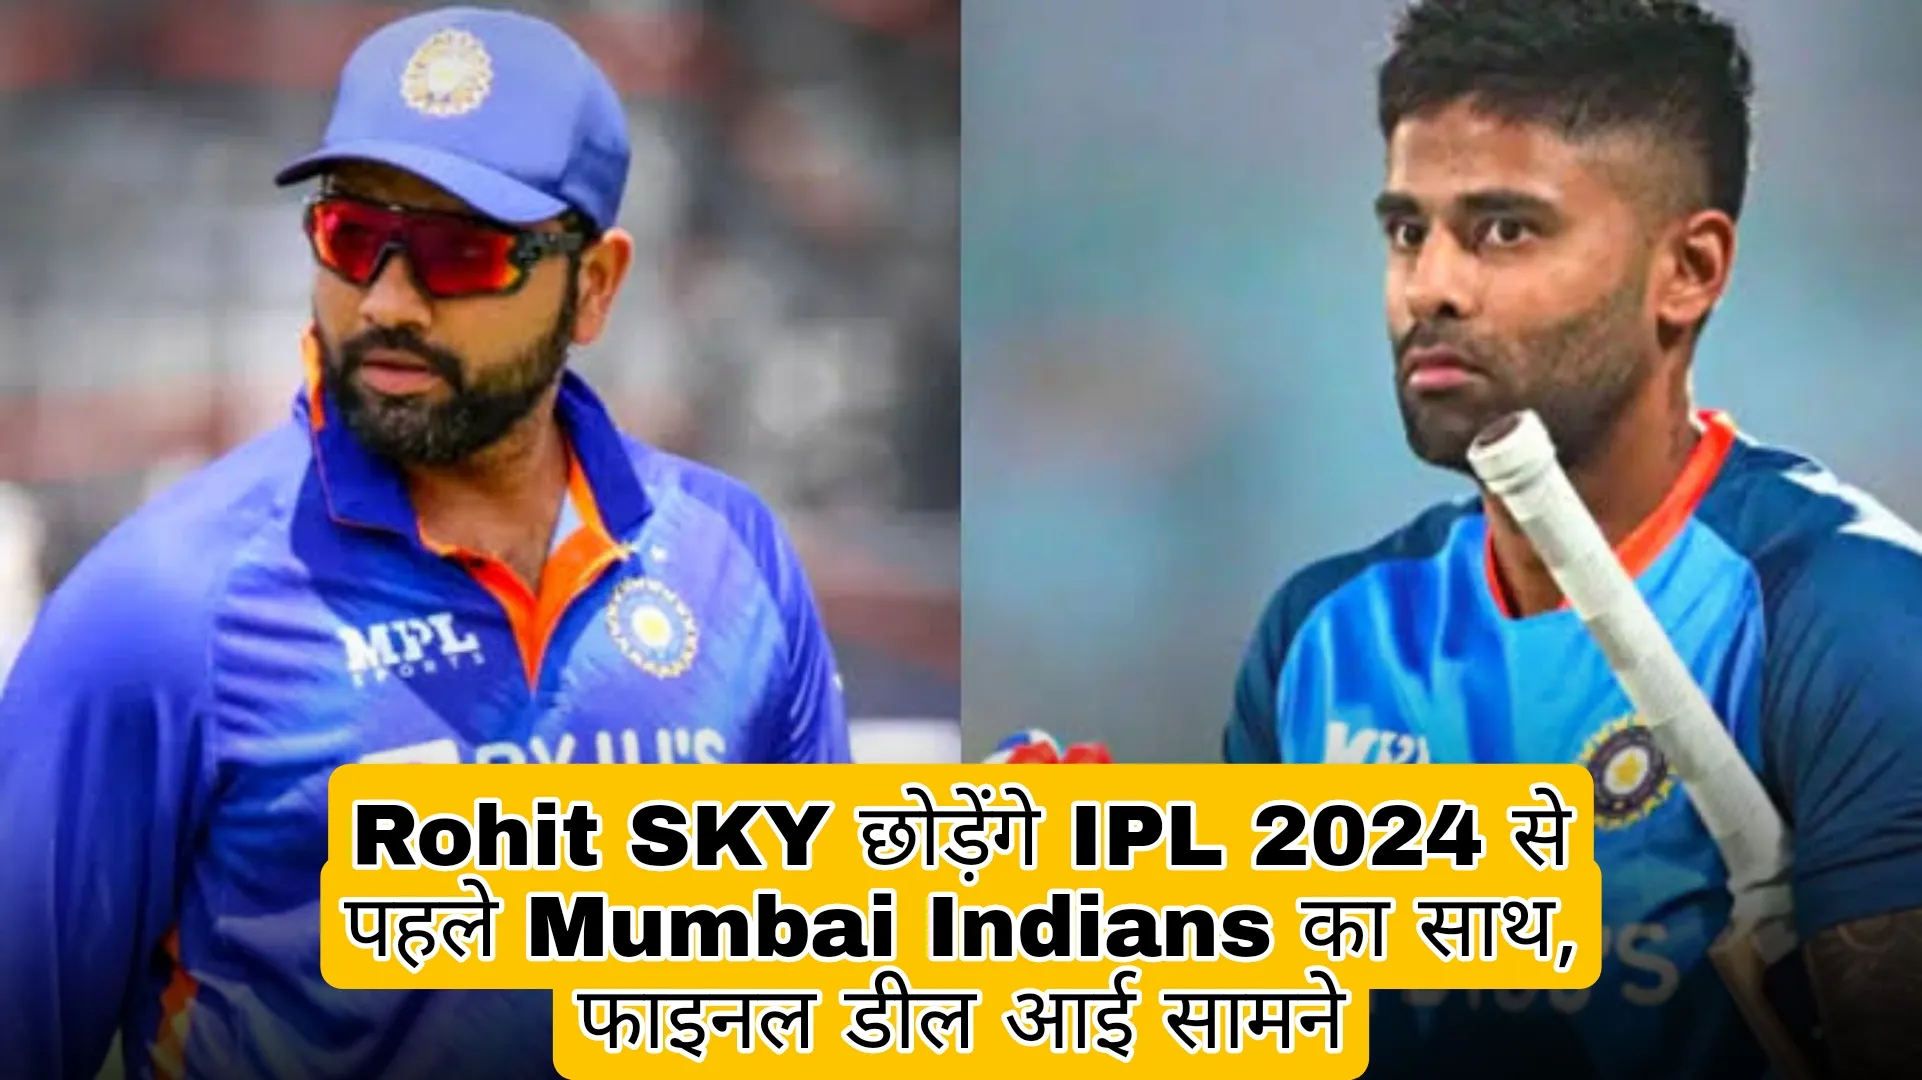 Rohit SKY will leave Mumbai Indians